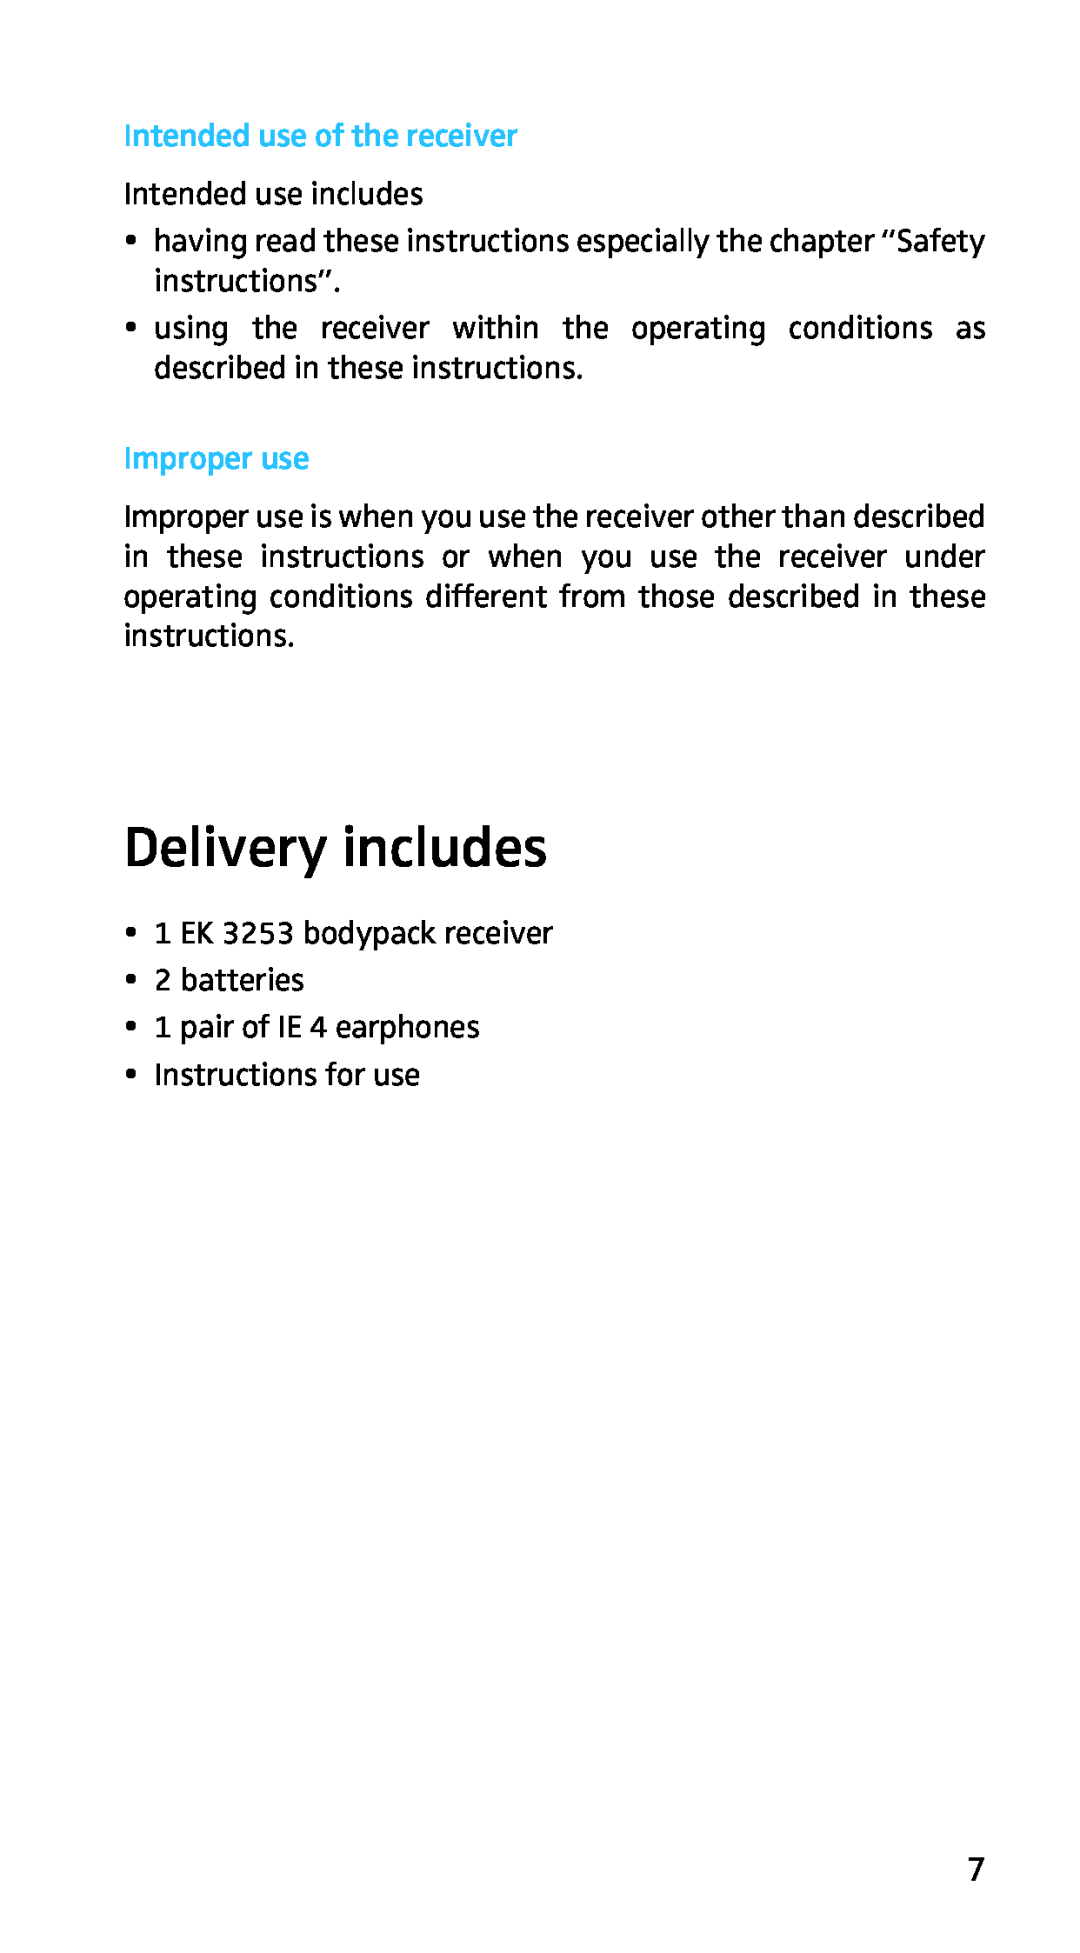 Sennheiser EK3253 manual Delivery includes, Intended use of the receiver, Improper use 